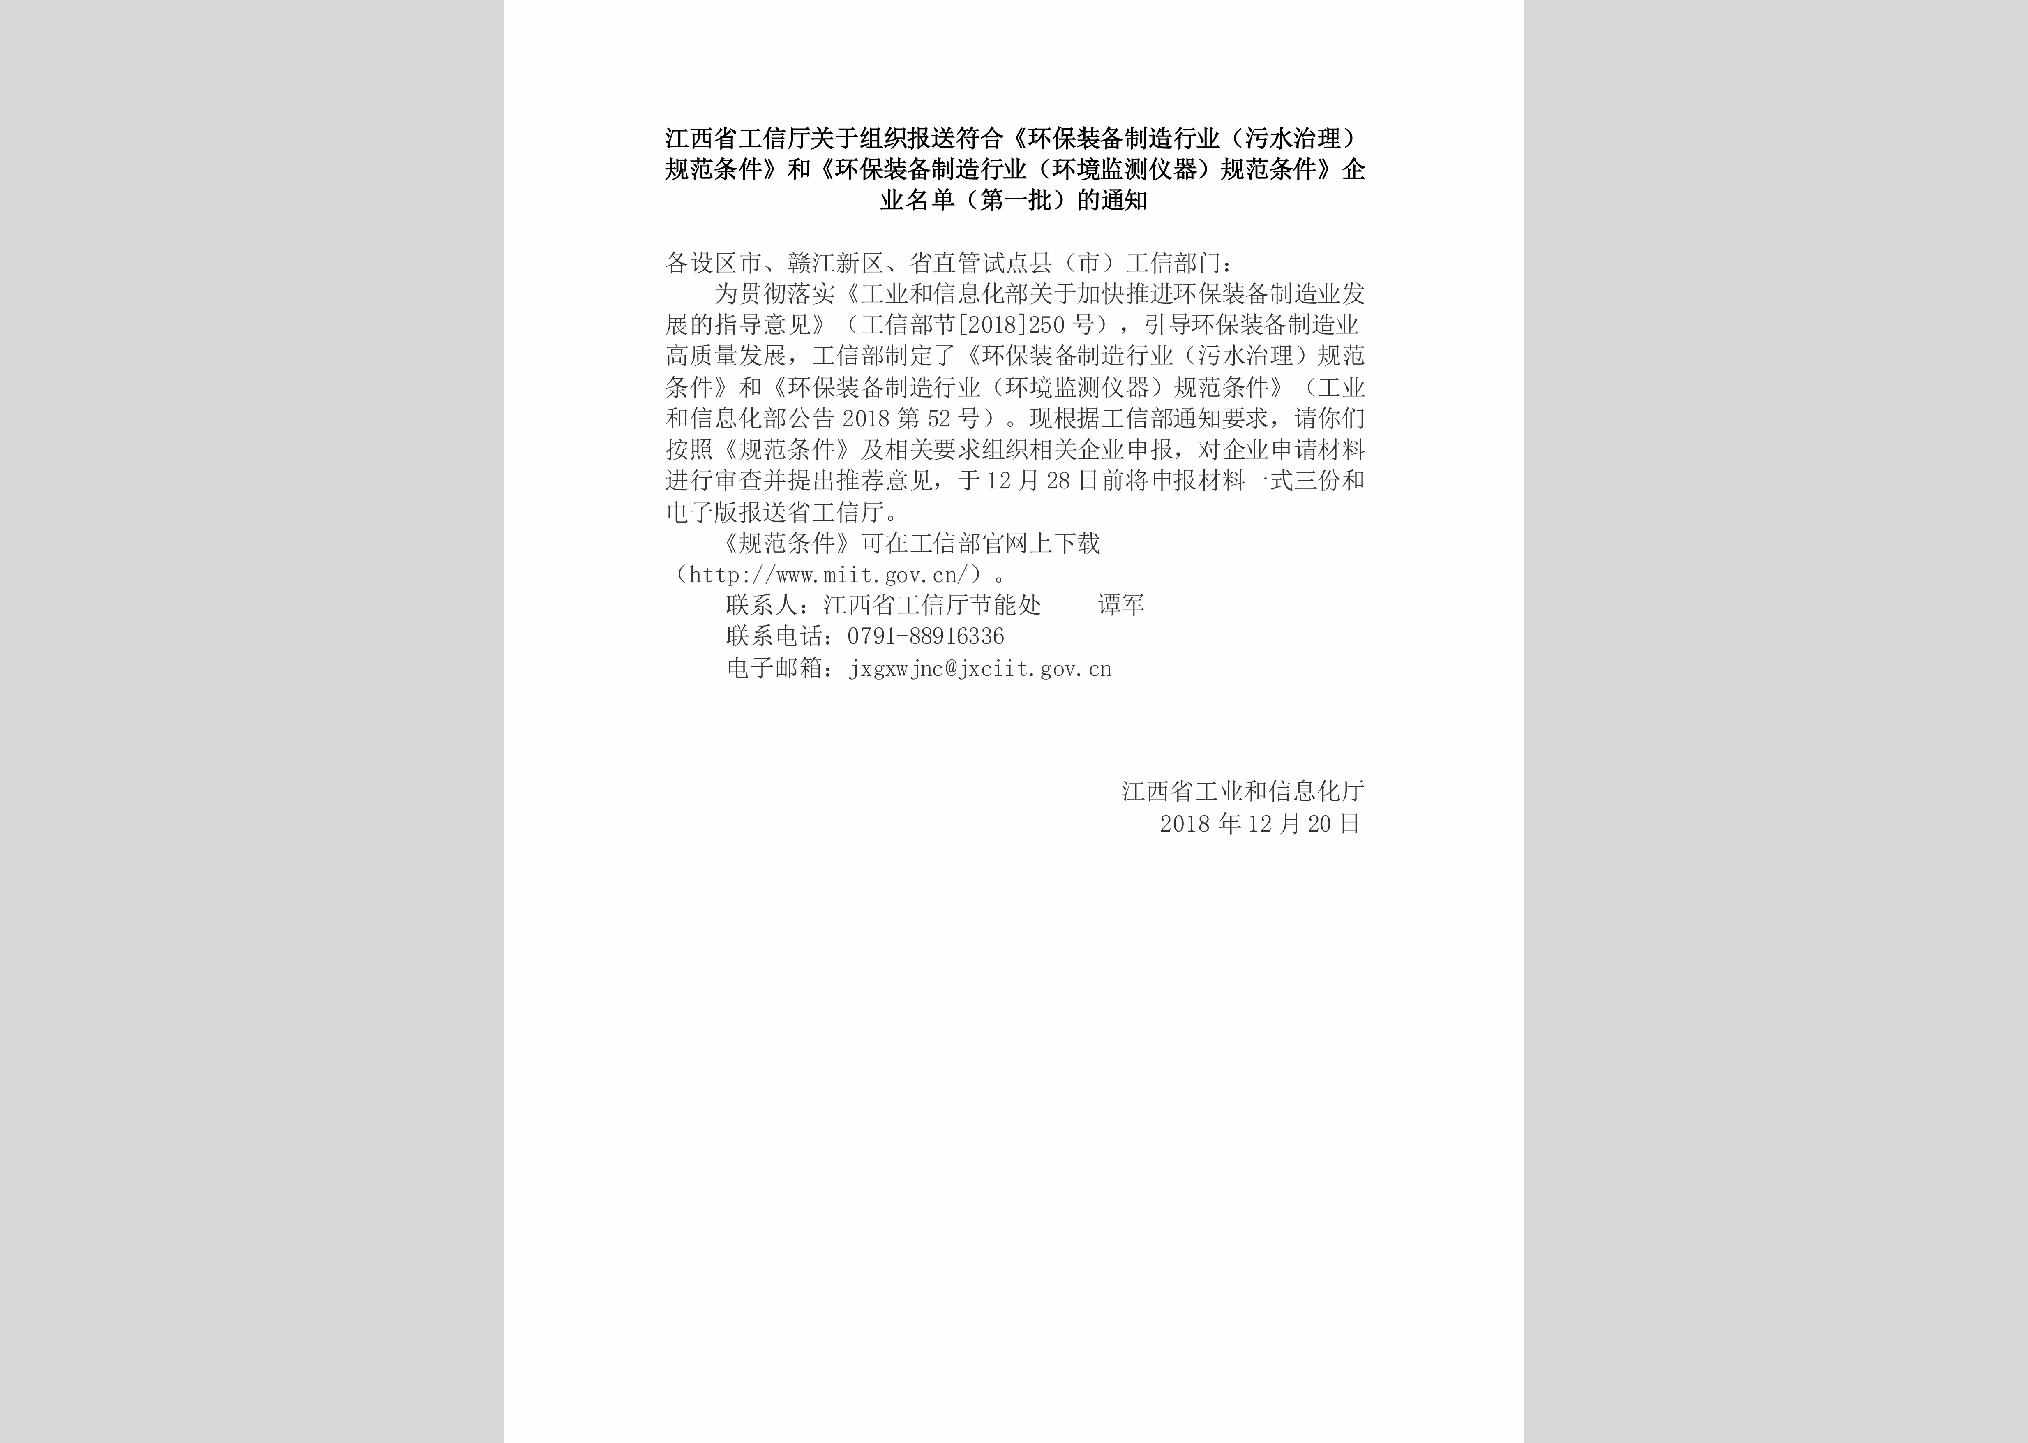 JX-QYMDGFTJ-2018：江西省工信厅关于组织报送符合《环保装备制造行业（污水治理）规范条件》和《环保装备制造行业（环境监测仪器）规范条件》企业名单（第一批）的通知